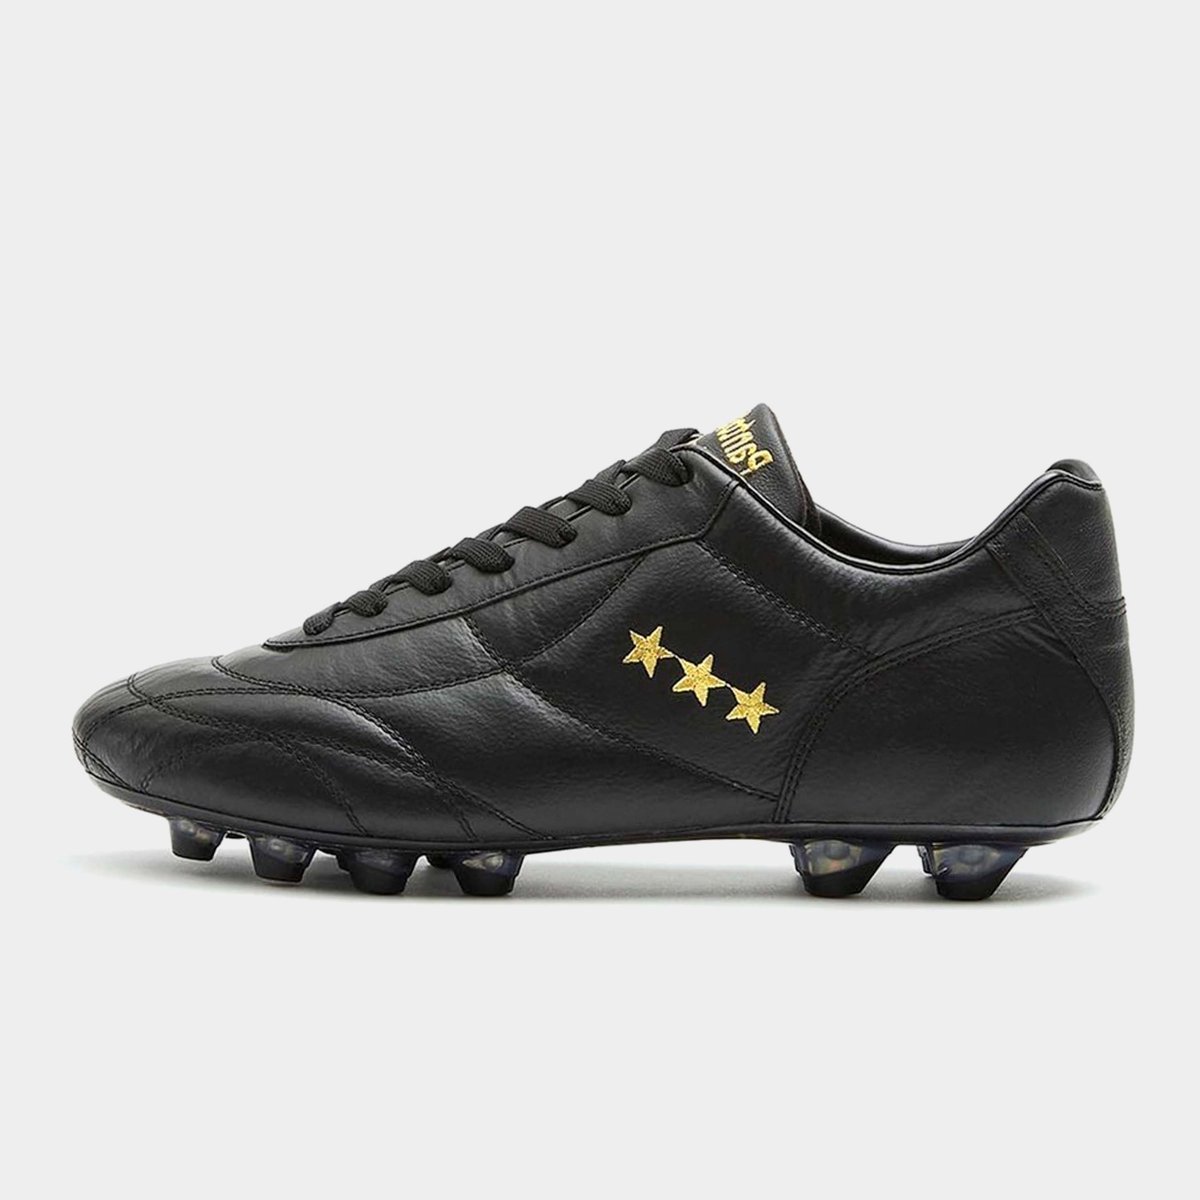 Pantofola d'Oro Football Boots - Lovell Soccer